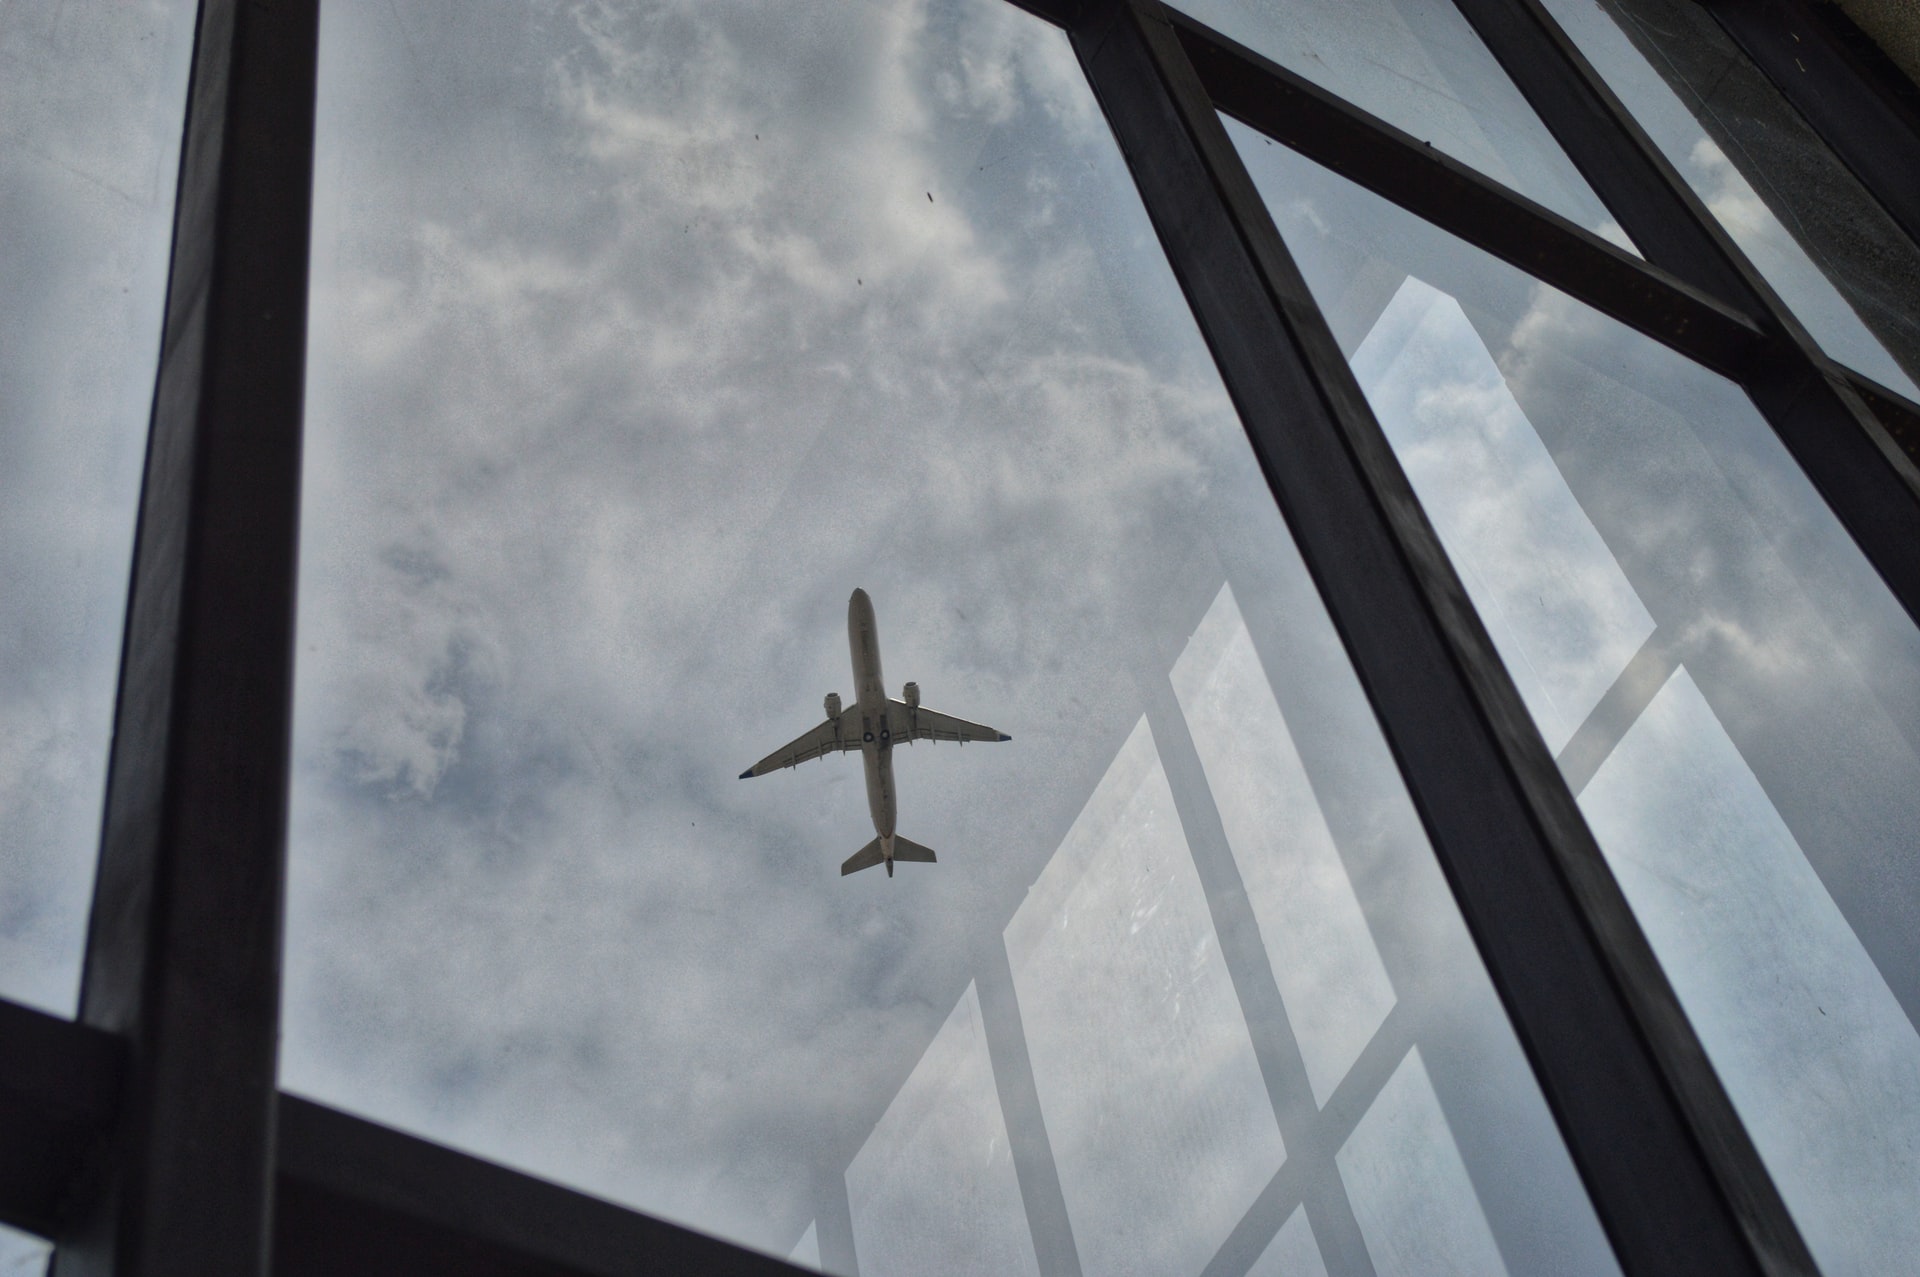 View of plane through window